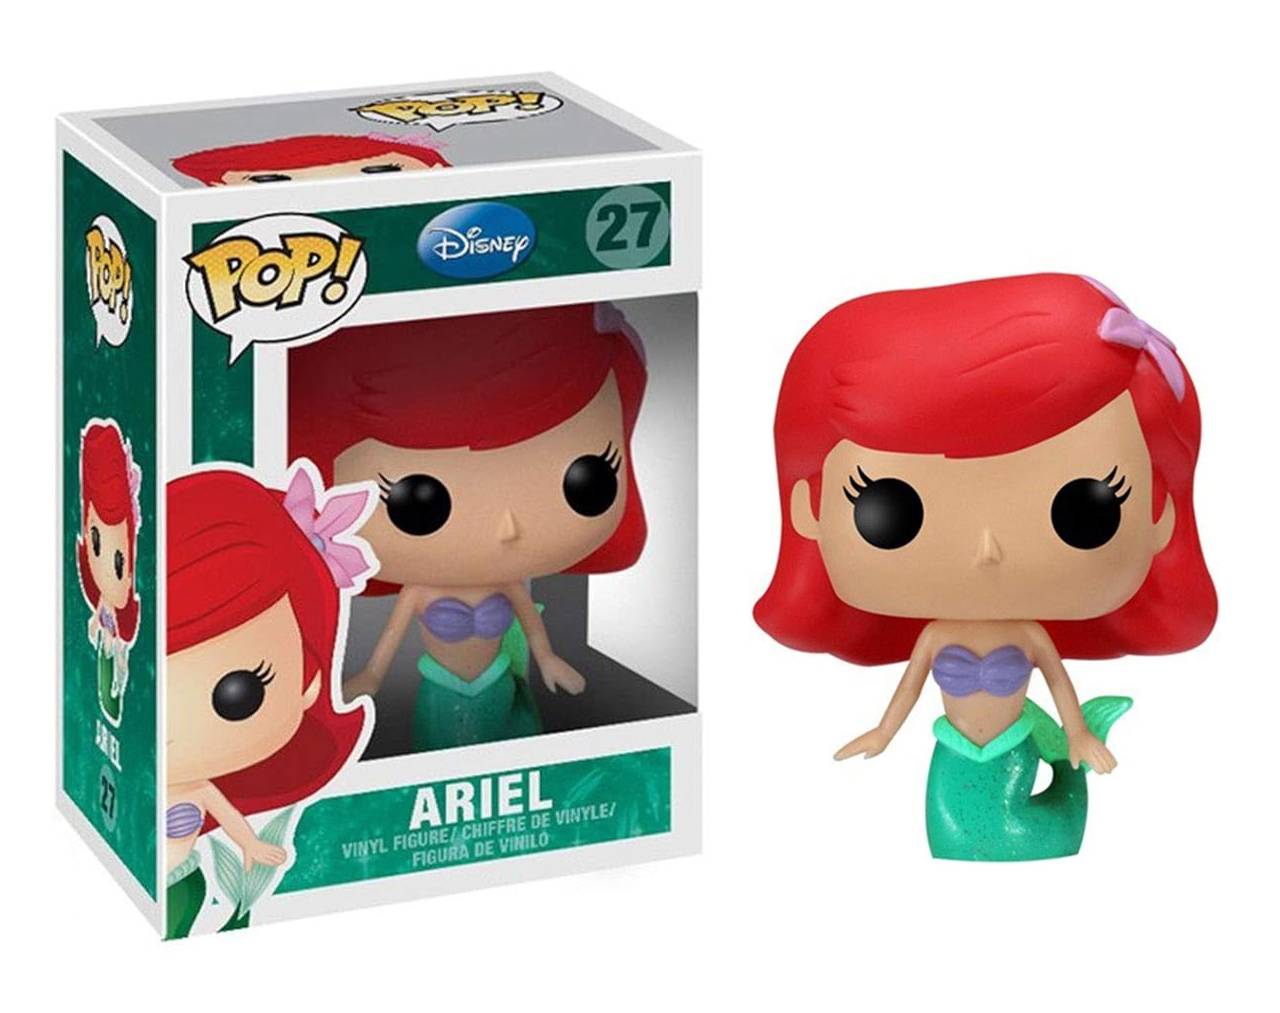 Ariel (2023 Edition) - The Little Mermaid Pop! Vinyl